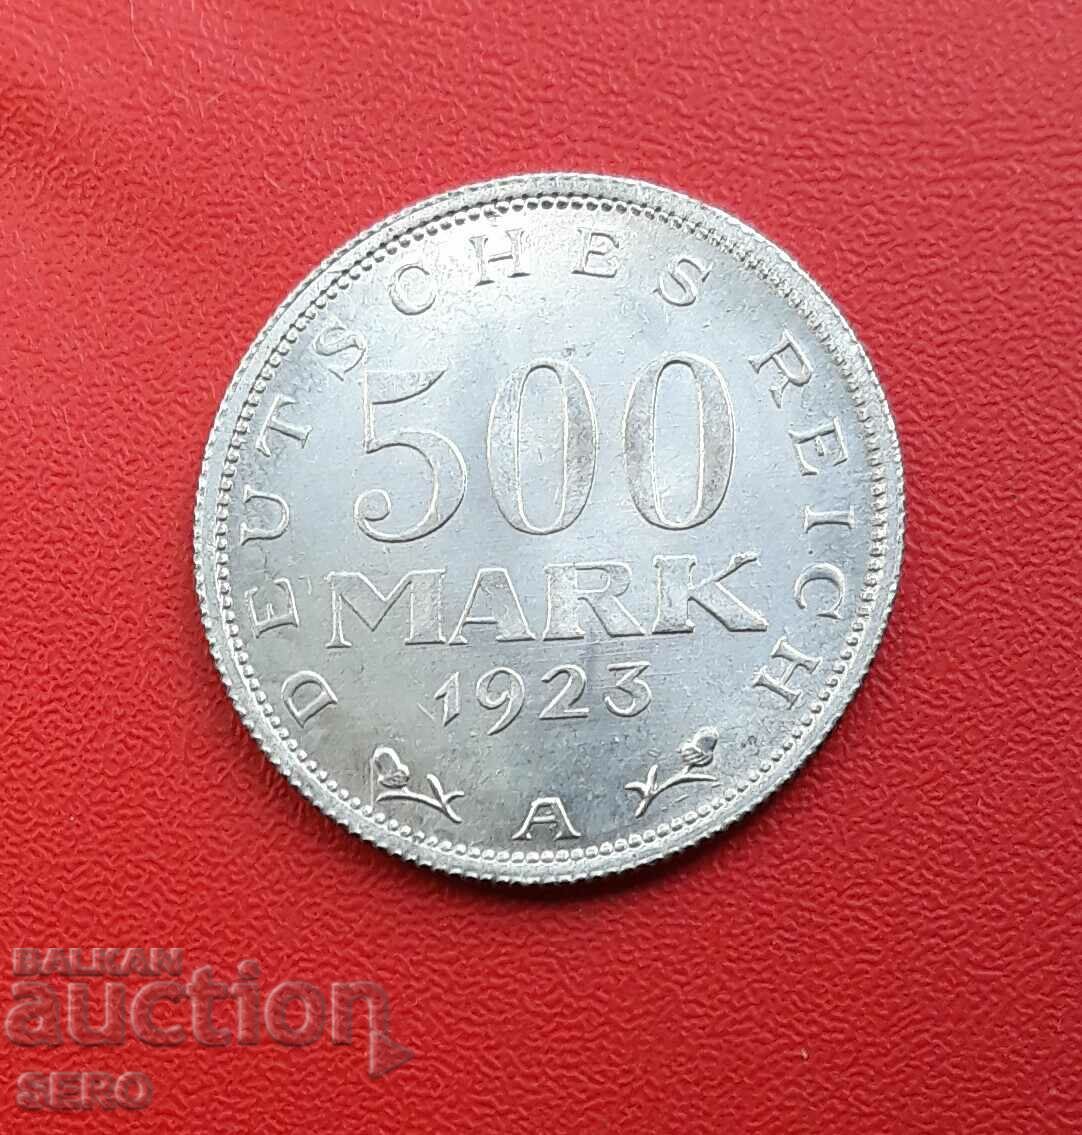 Германия-500 марки 1923 А-Берлин